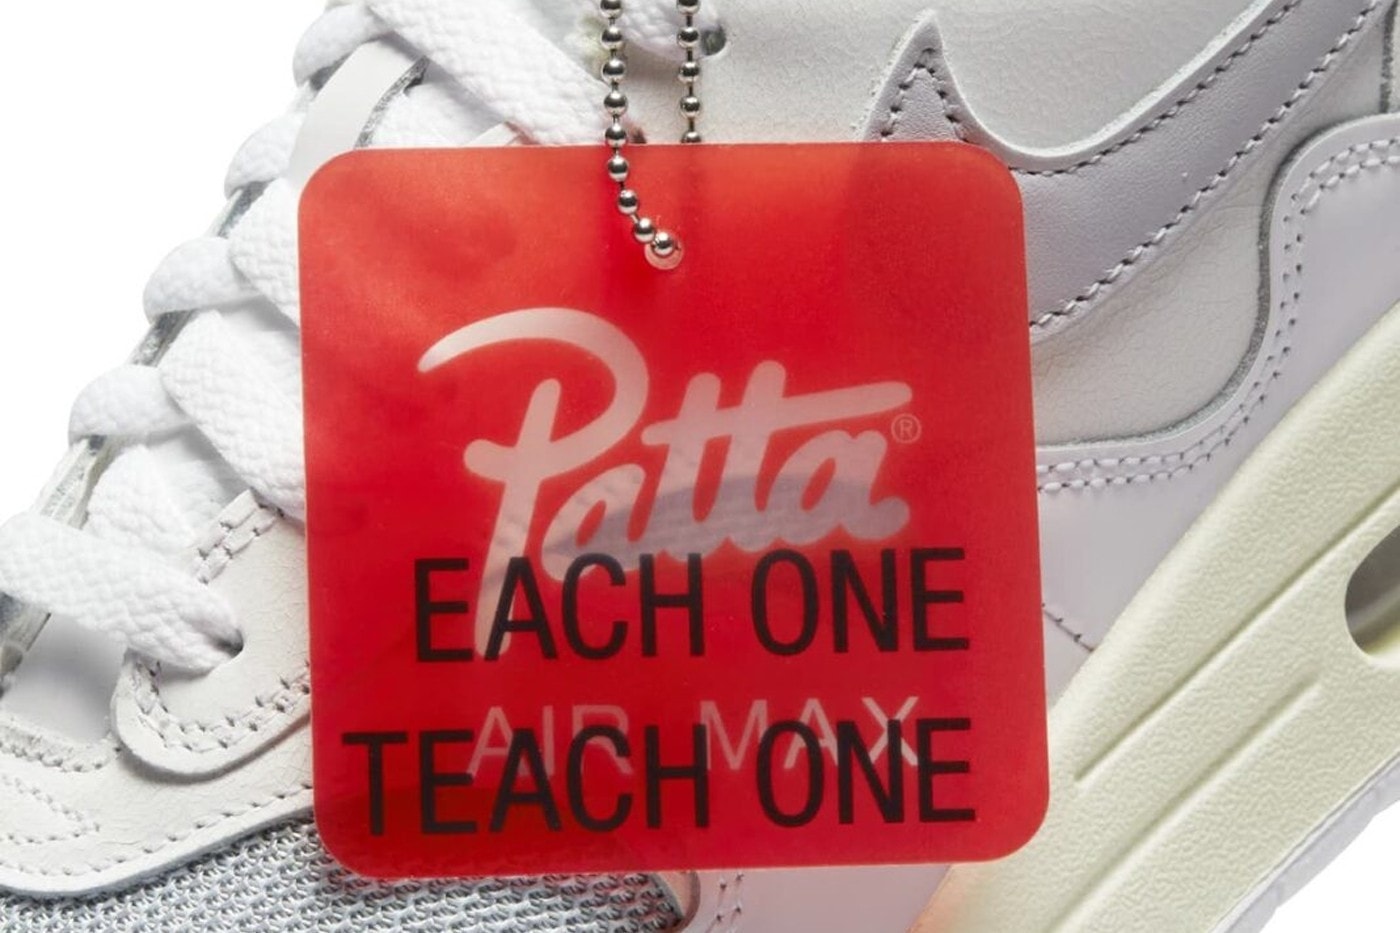 Patta x Nike Air Max 1 最新联名配色「White」发售日期正式确立